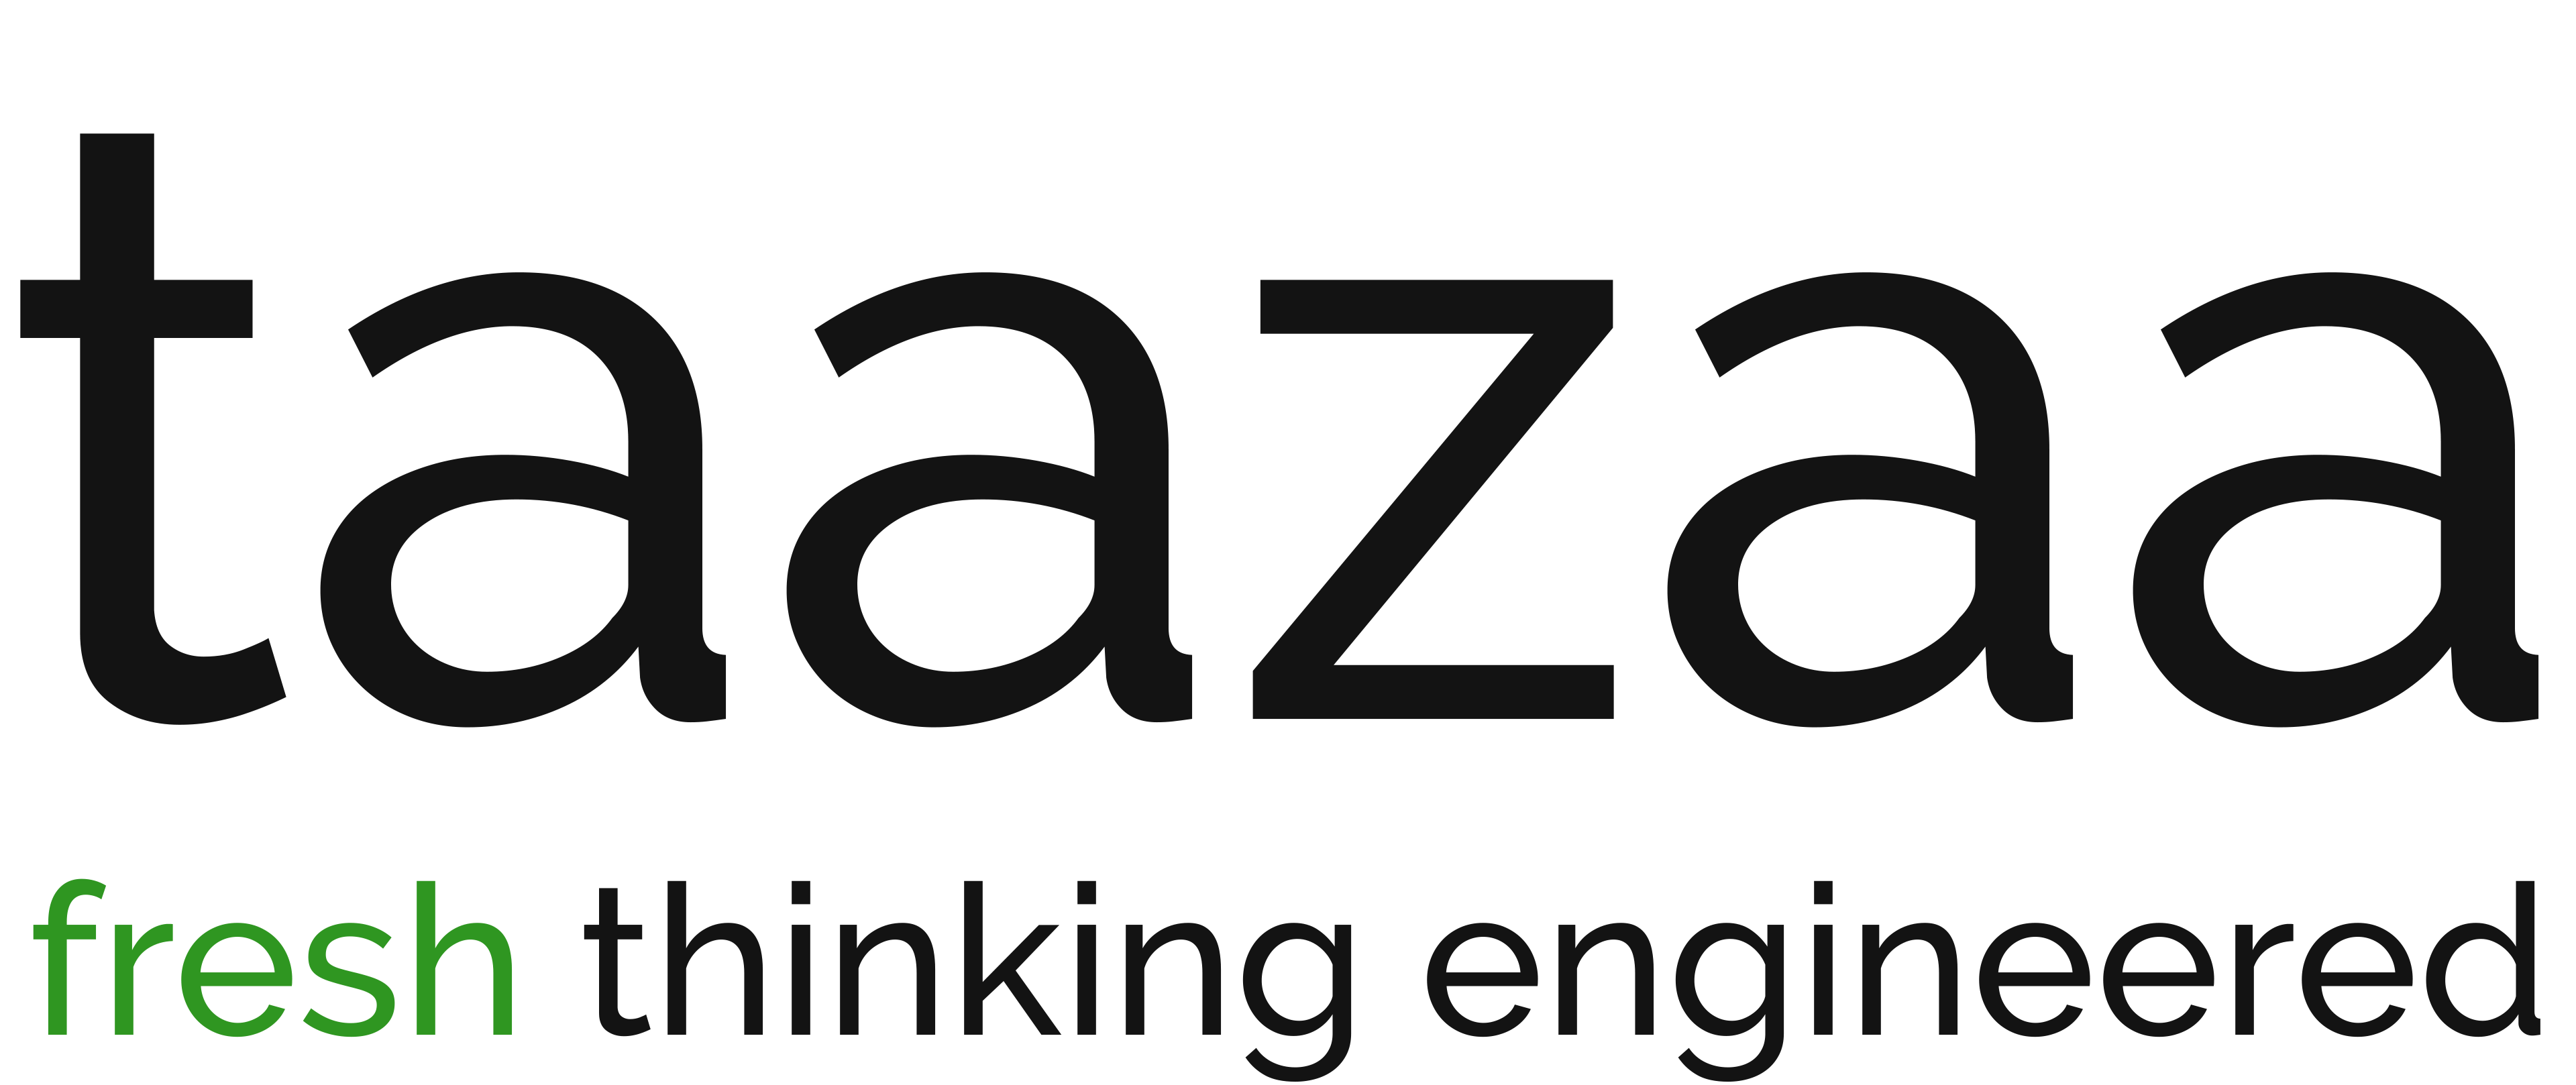 Taazaa Inc. profile on Qualified.One